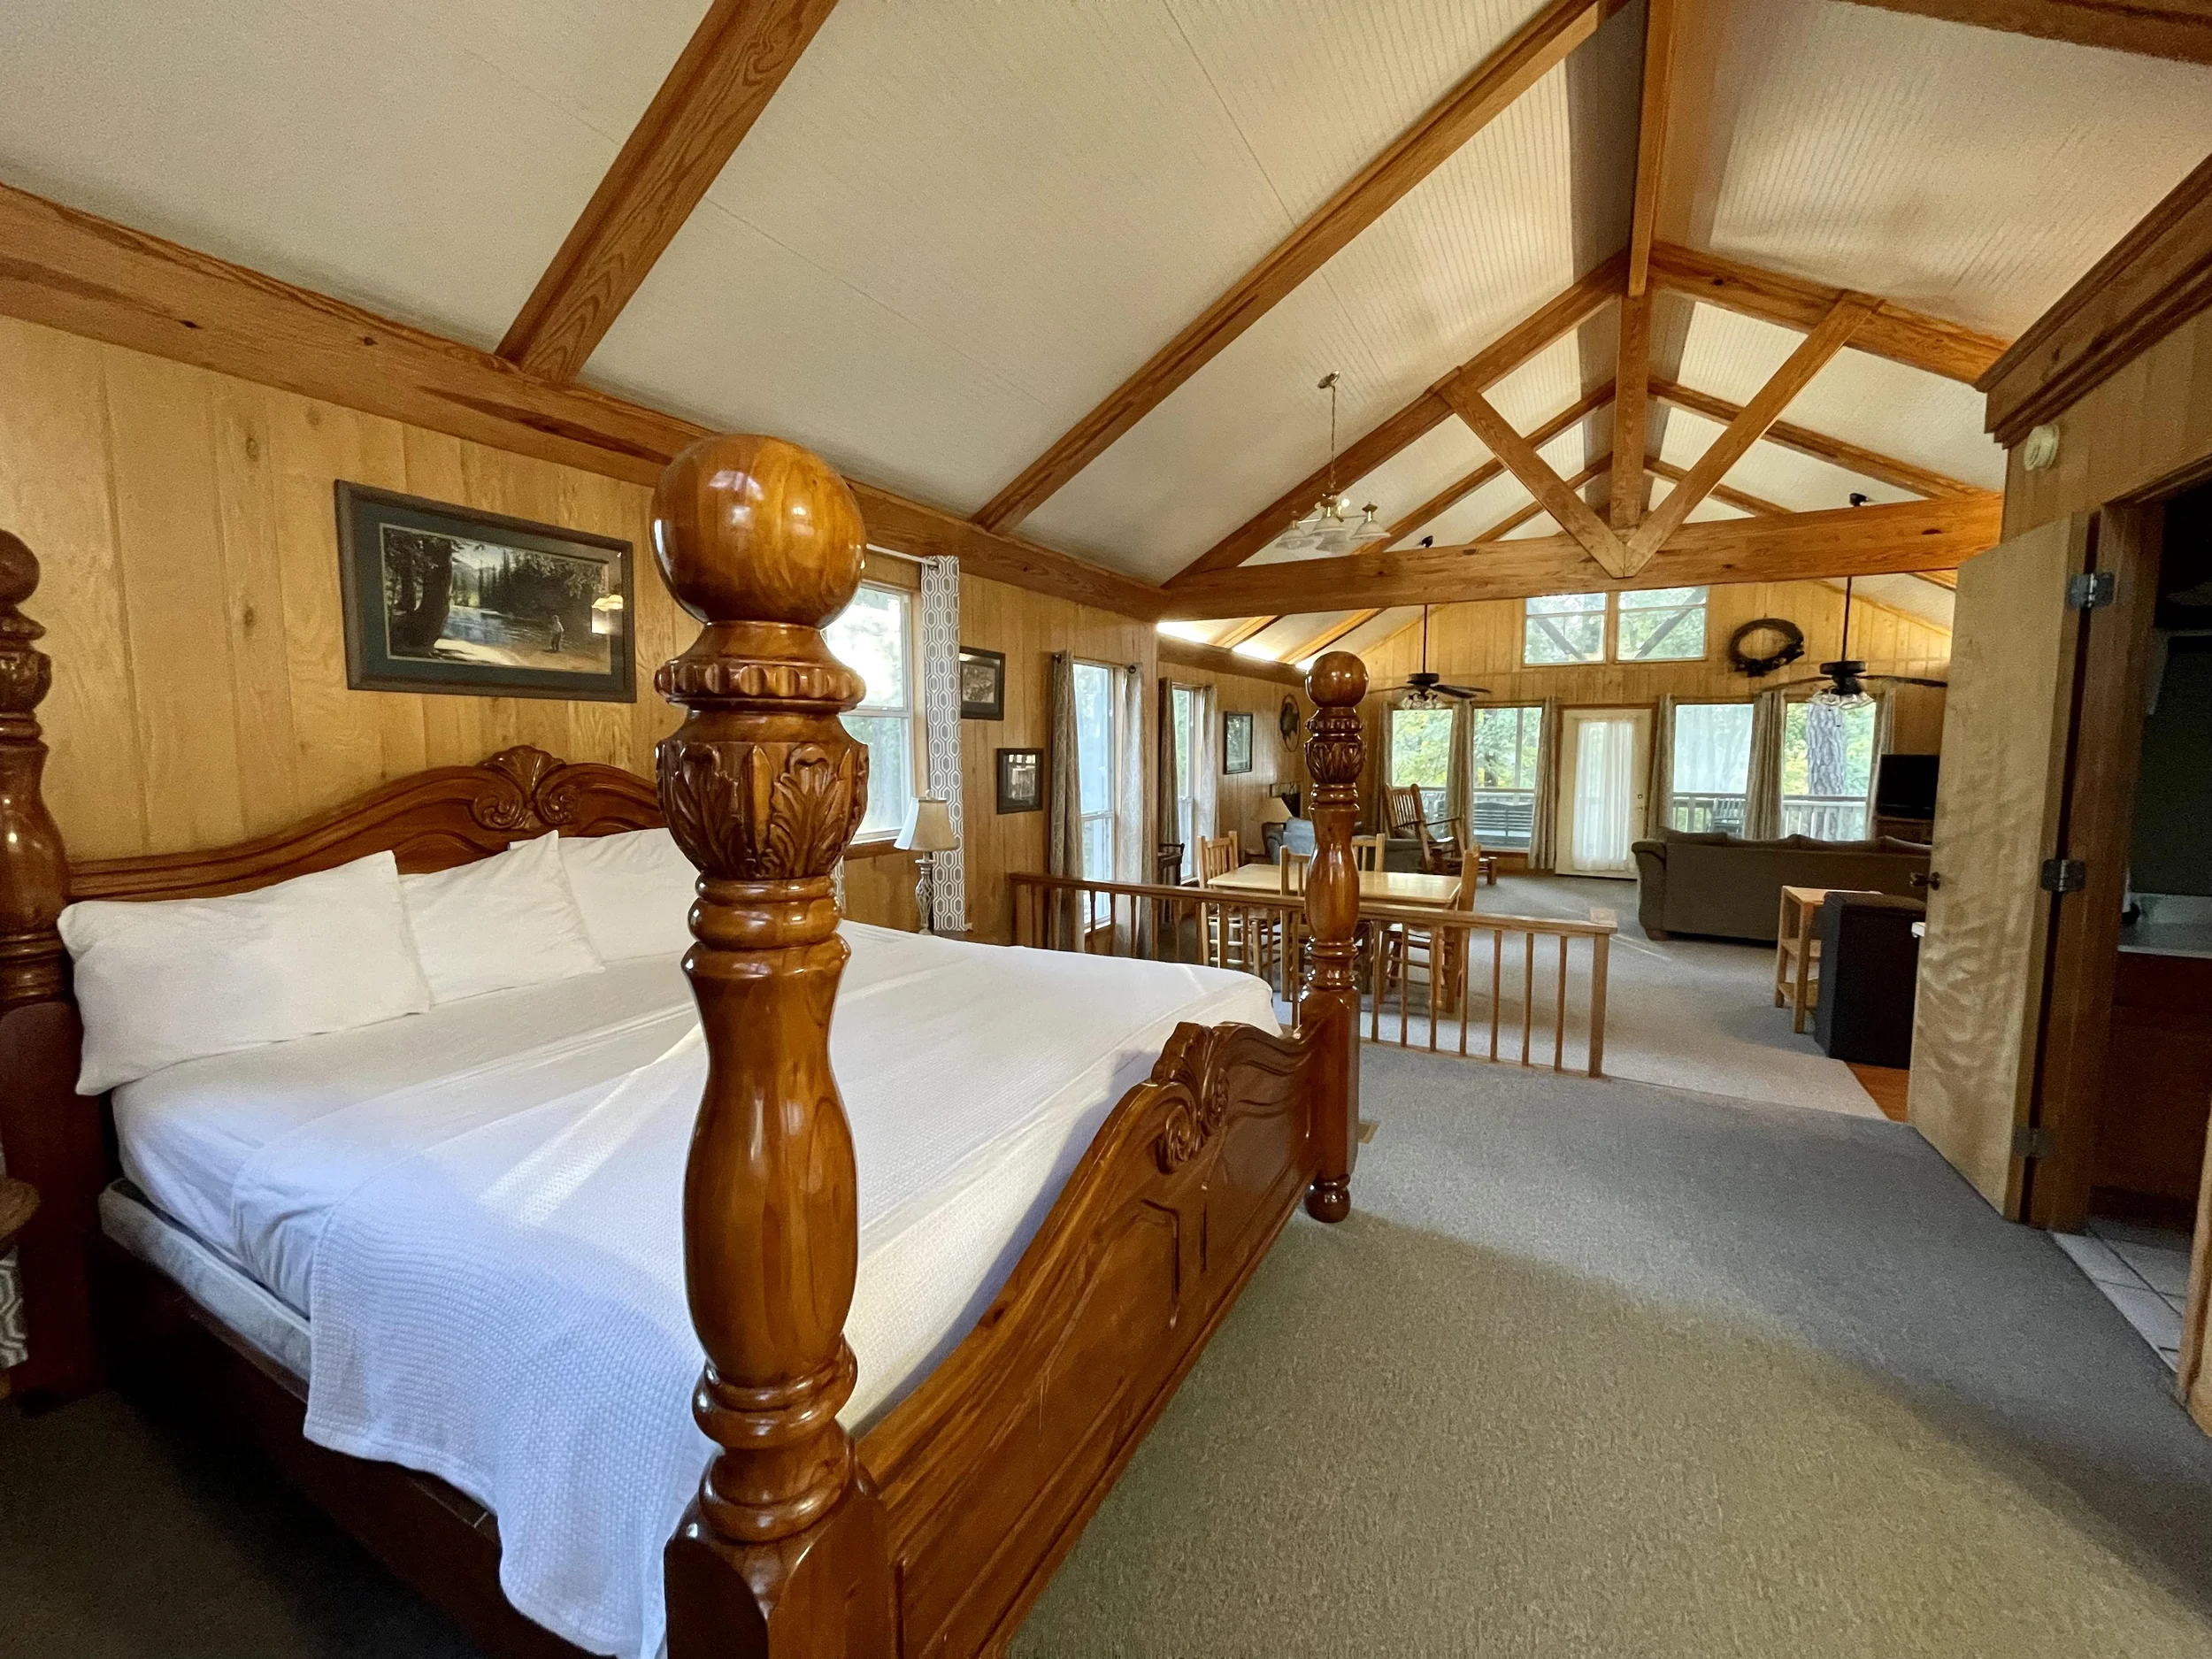 Sleeping accommodations at Wildwood resort